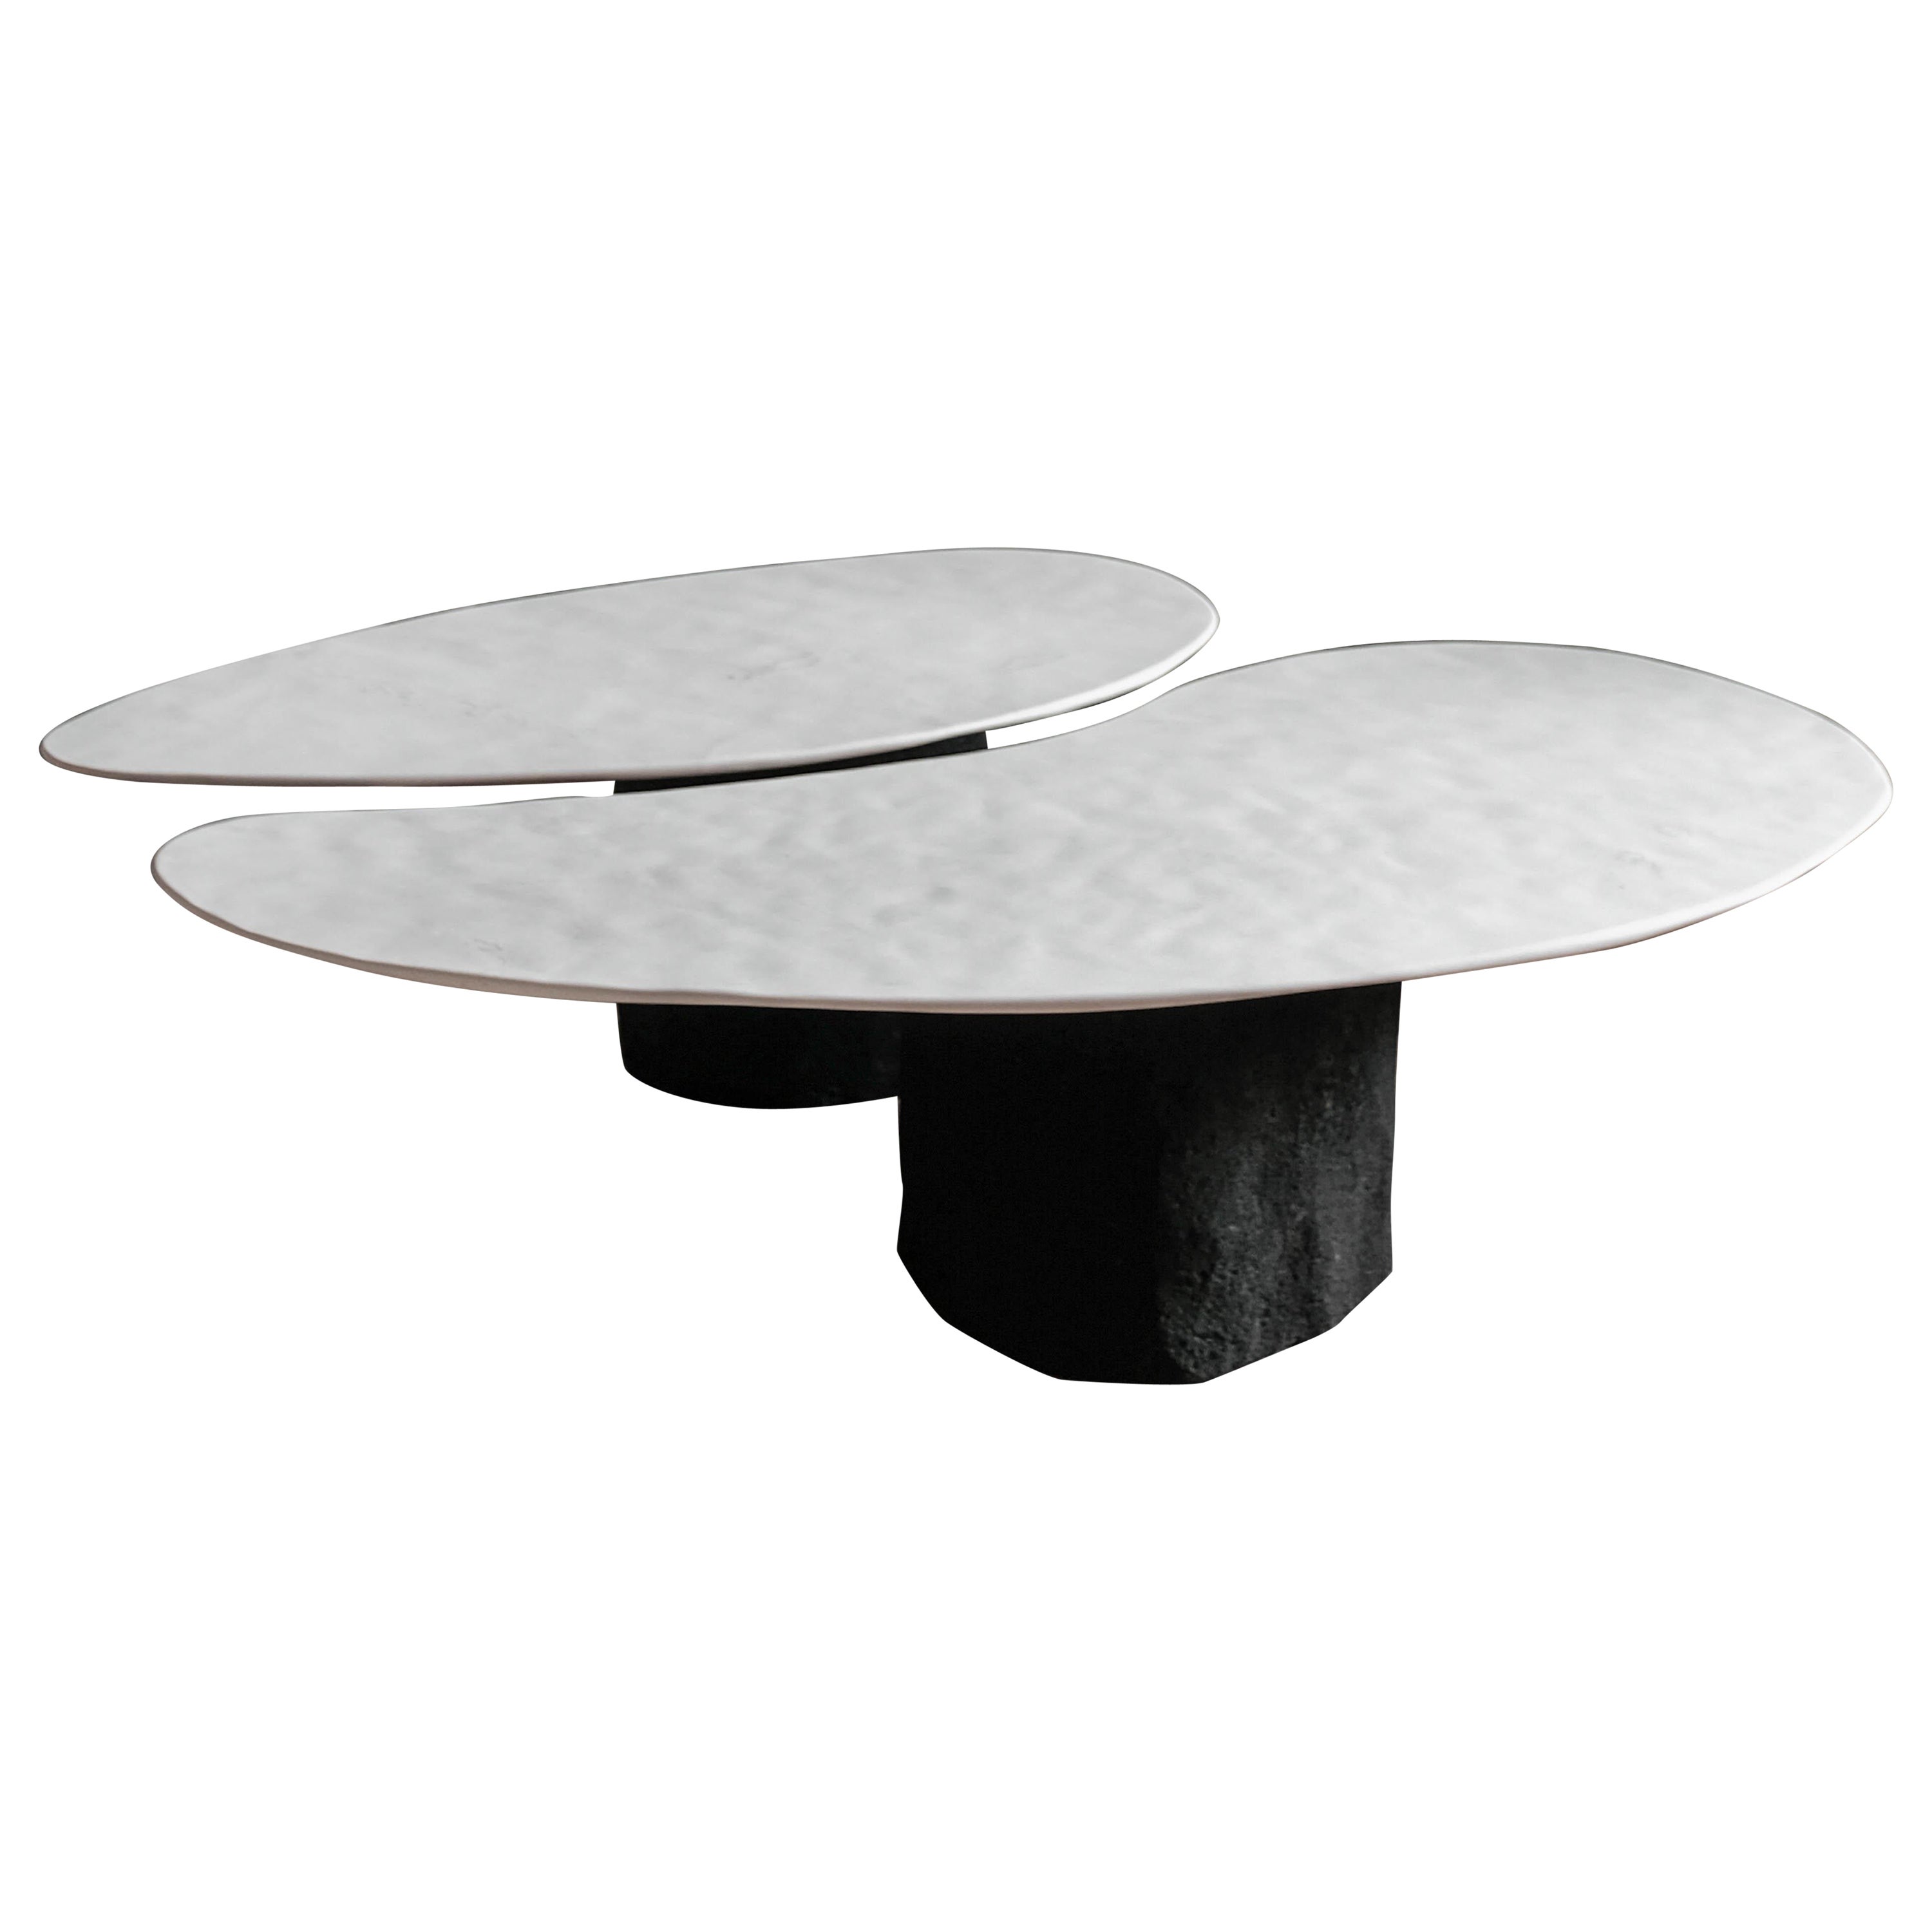 Set of 2 Limestone Low Table by Atelier Benoit Viaene